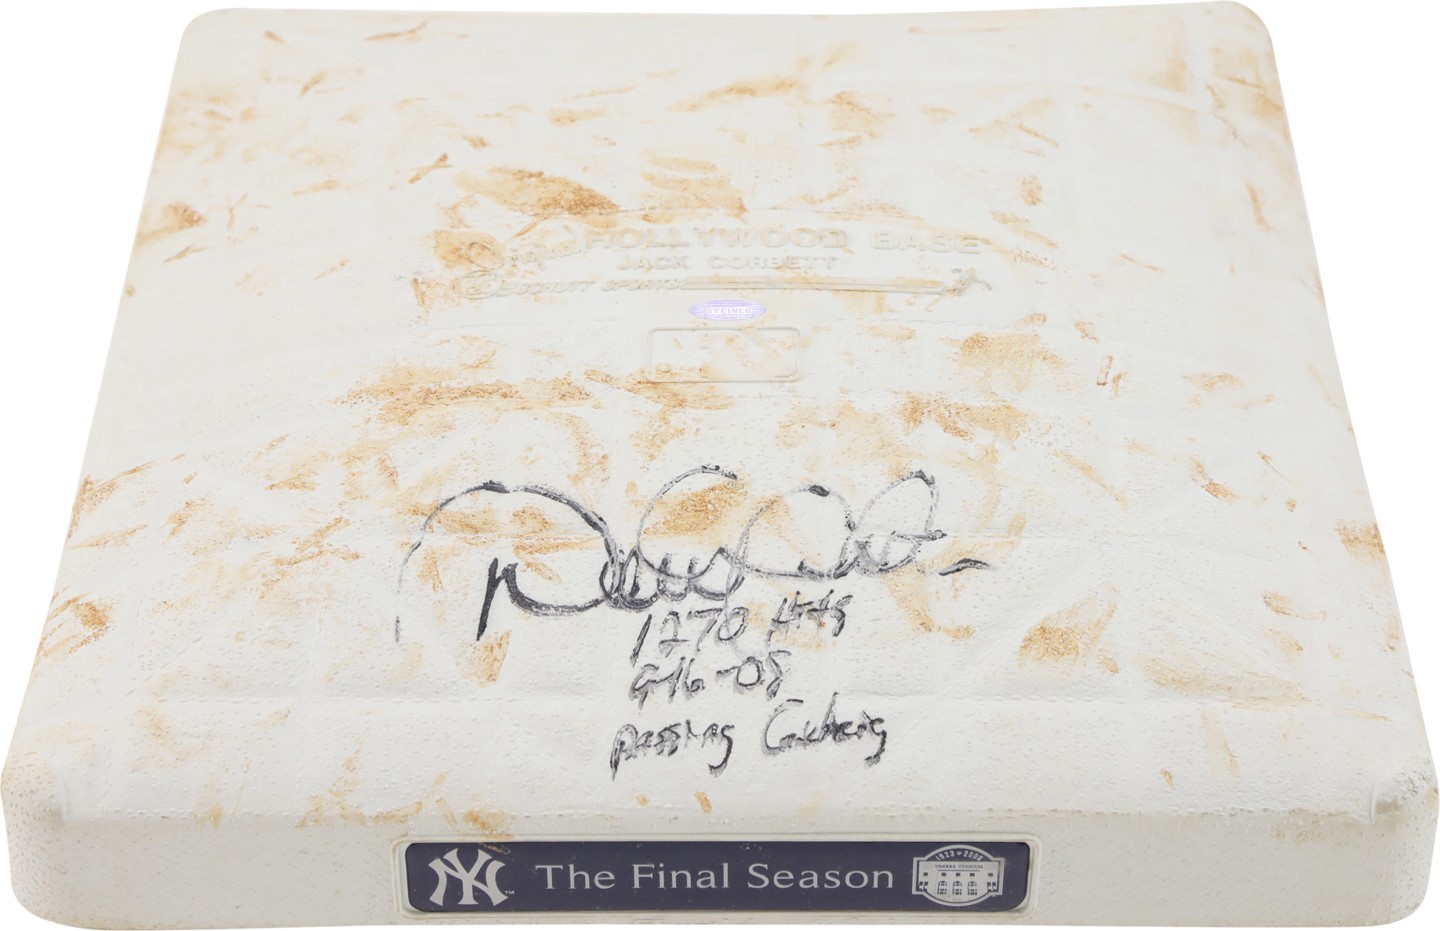 - 9/16/08 Derek Jeter Signed Game Used Base from Record Breaking Game - Jeter Passes Lou Gehrig on Yankee Stadium Hit List (Steiner LOA & MLB Holo)